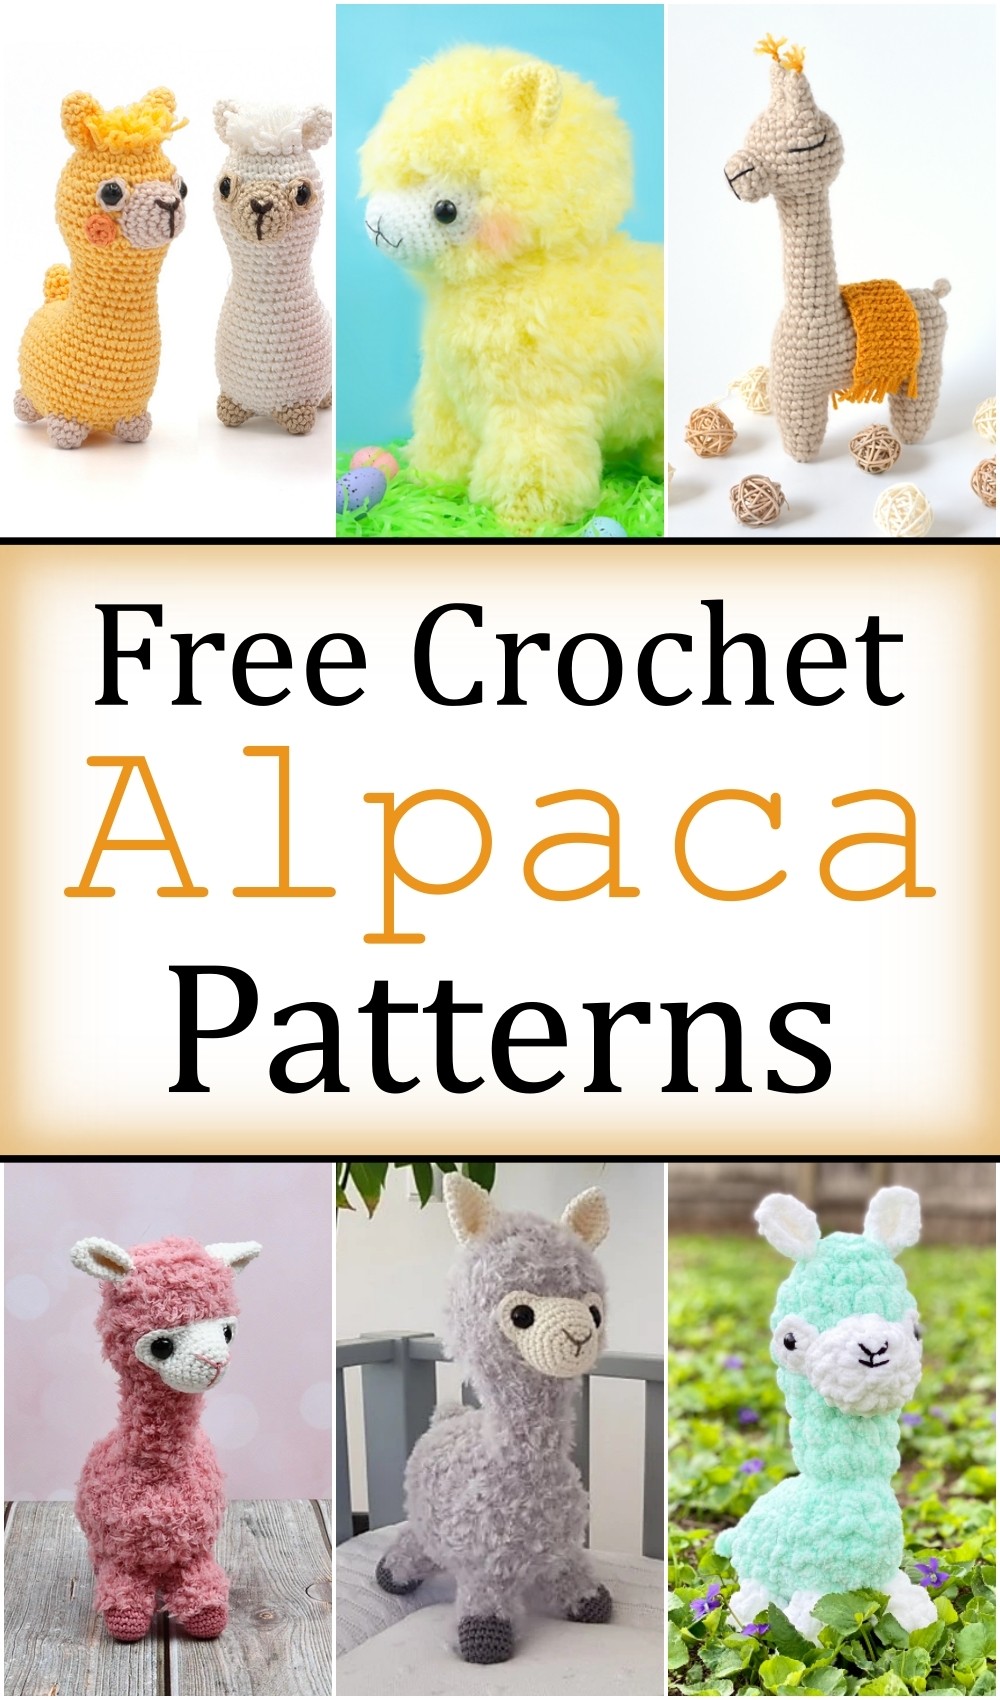 Free Crochet Alpaca Patterns